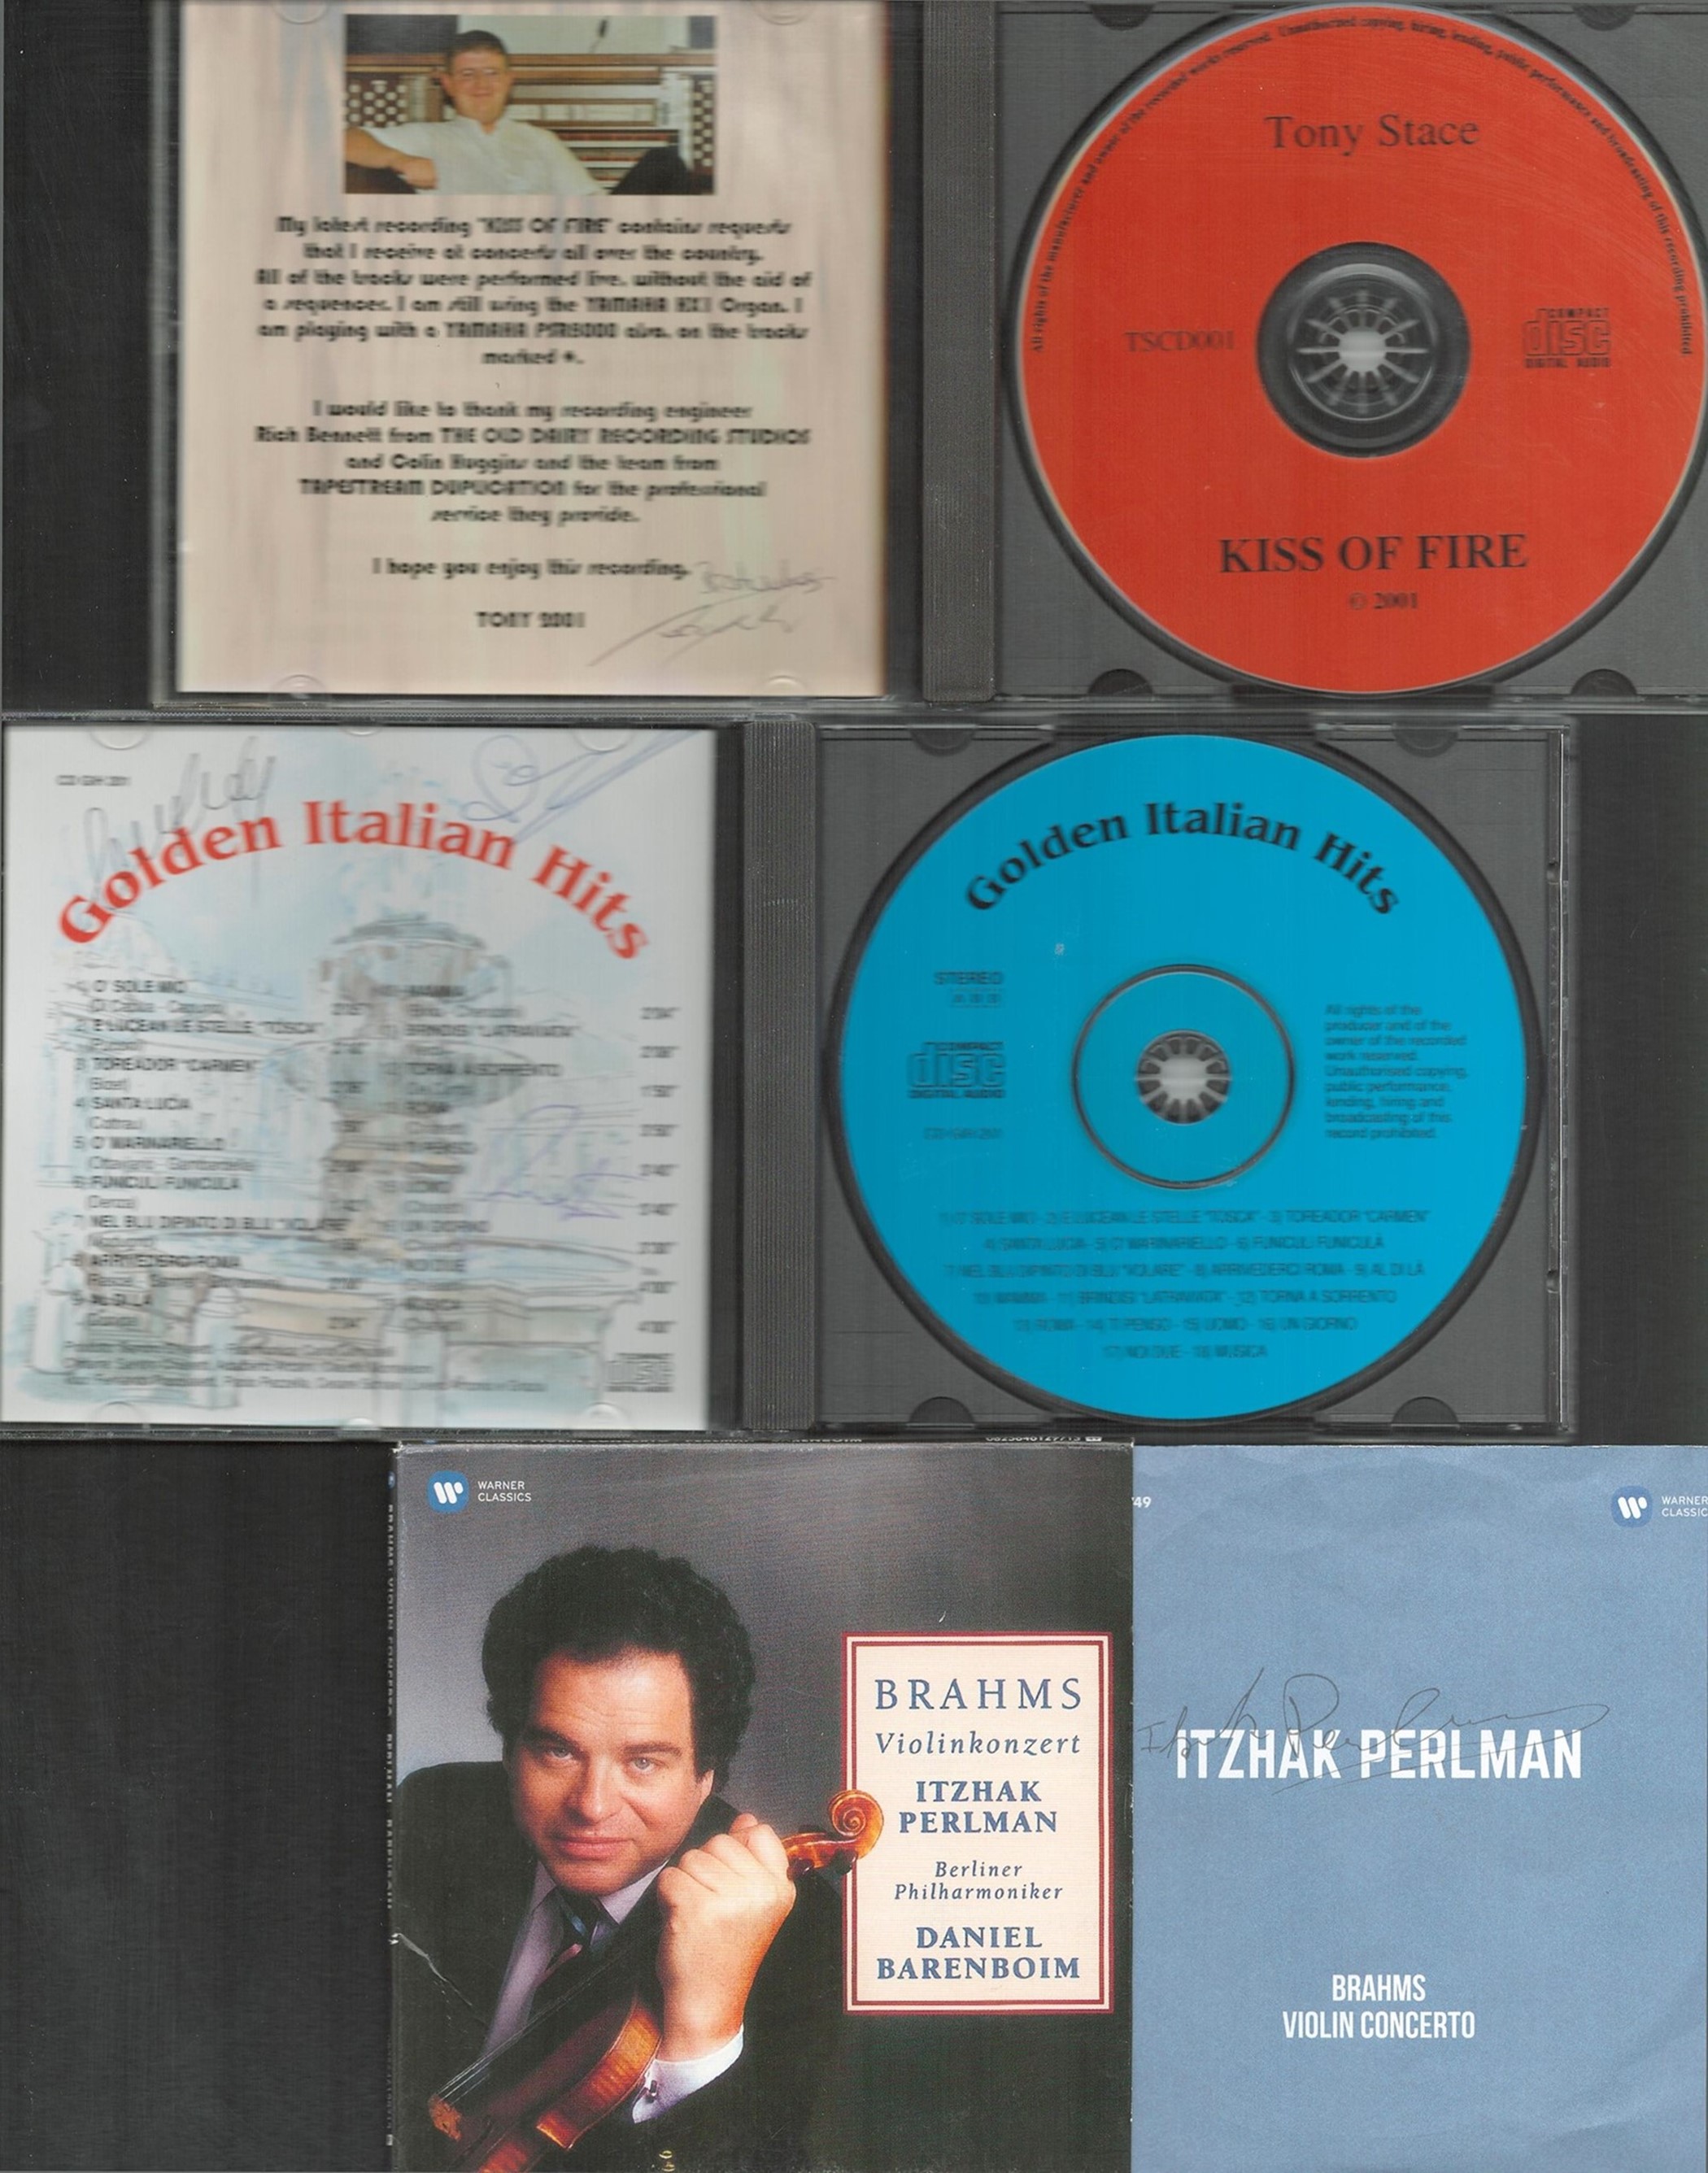 6 Signed CDs Including Joseph L Garlington (Joy) Disc Included, Compilation (Golden Italian Hits) - Image 2 of 3